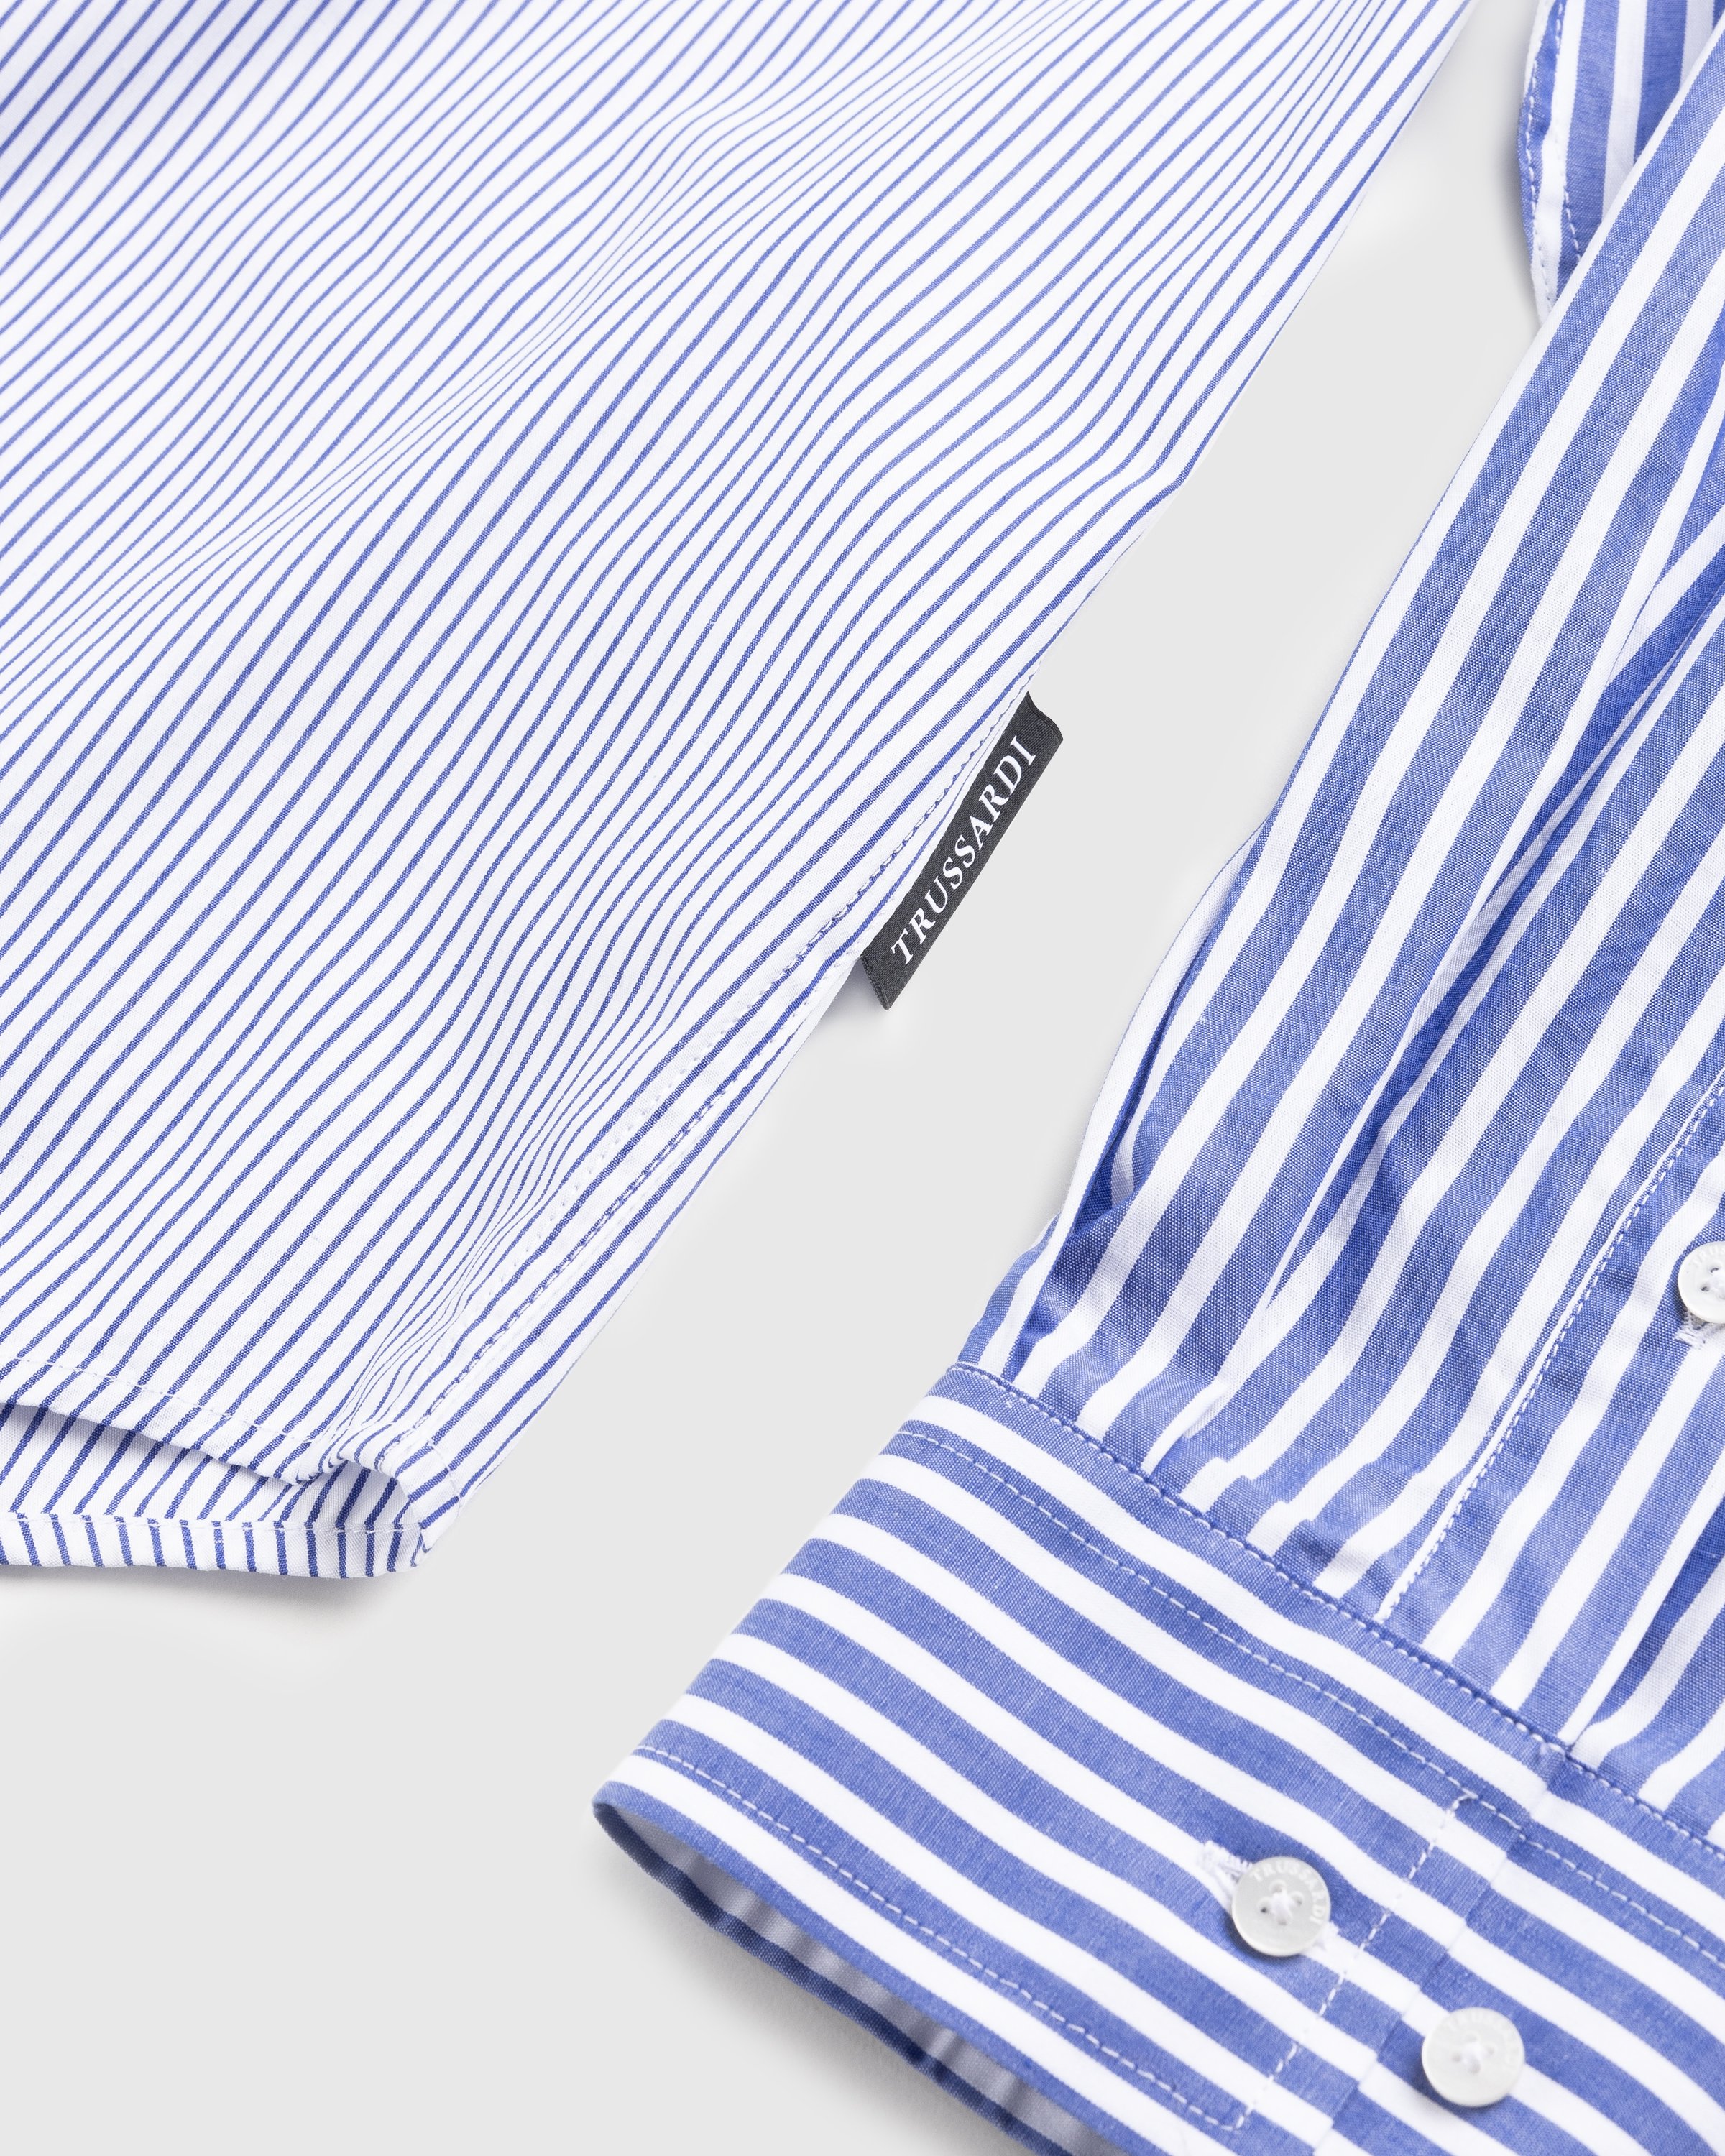 Trussardi - Shirt Cotton Mix Stripes - Clothing - Blue - Image 6